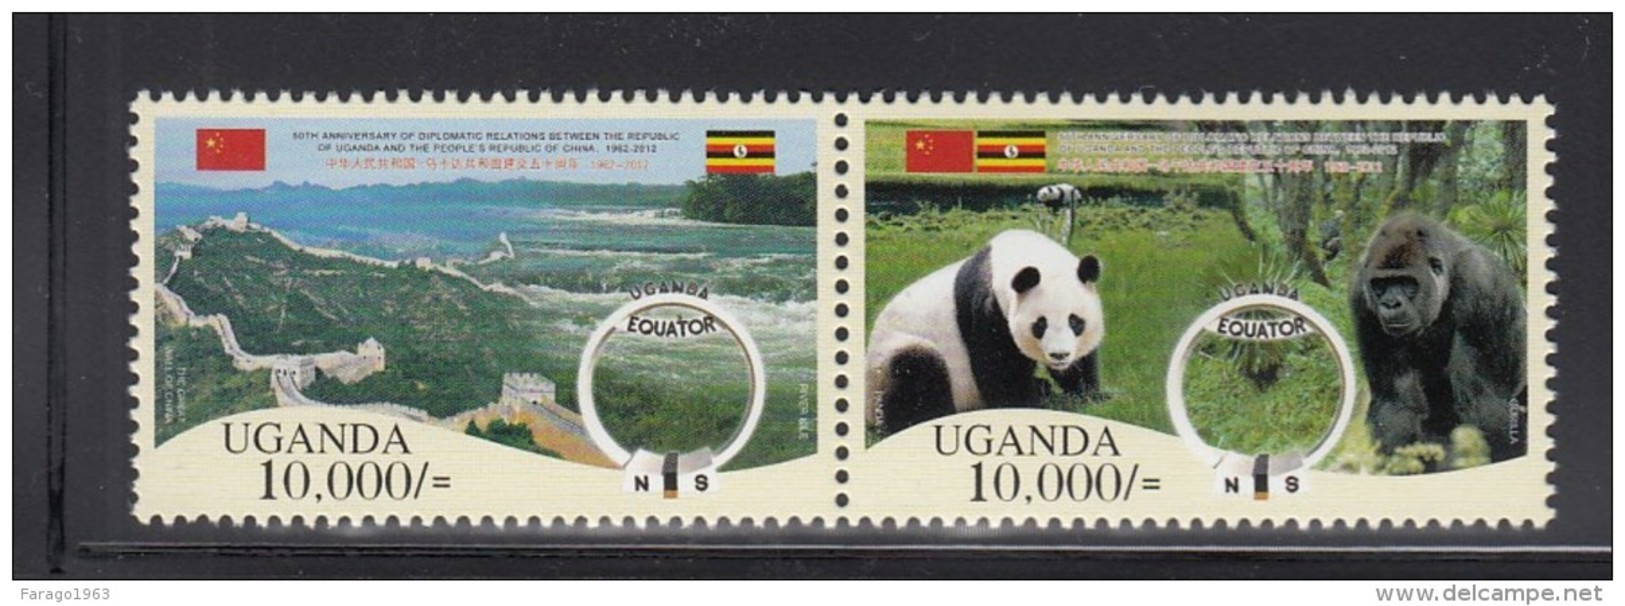 2012 Uganda Links With China Panda Gorilla Complete Set Of 2 And Souvenir Sheet  MNH - Uganda (1962-...)